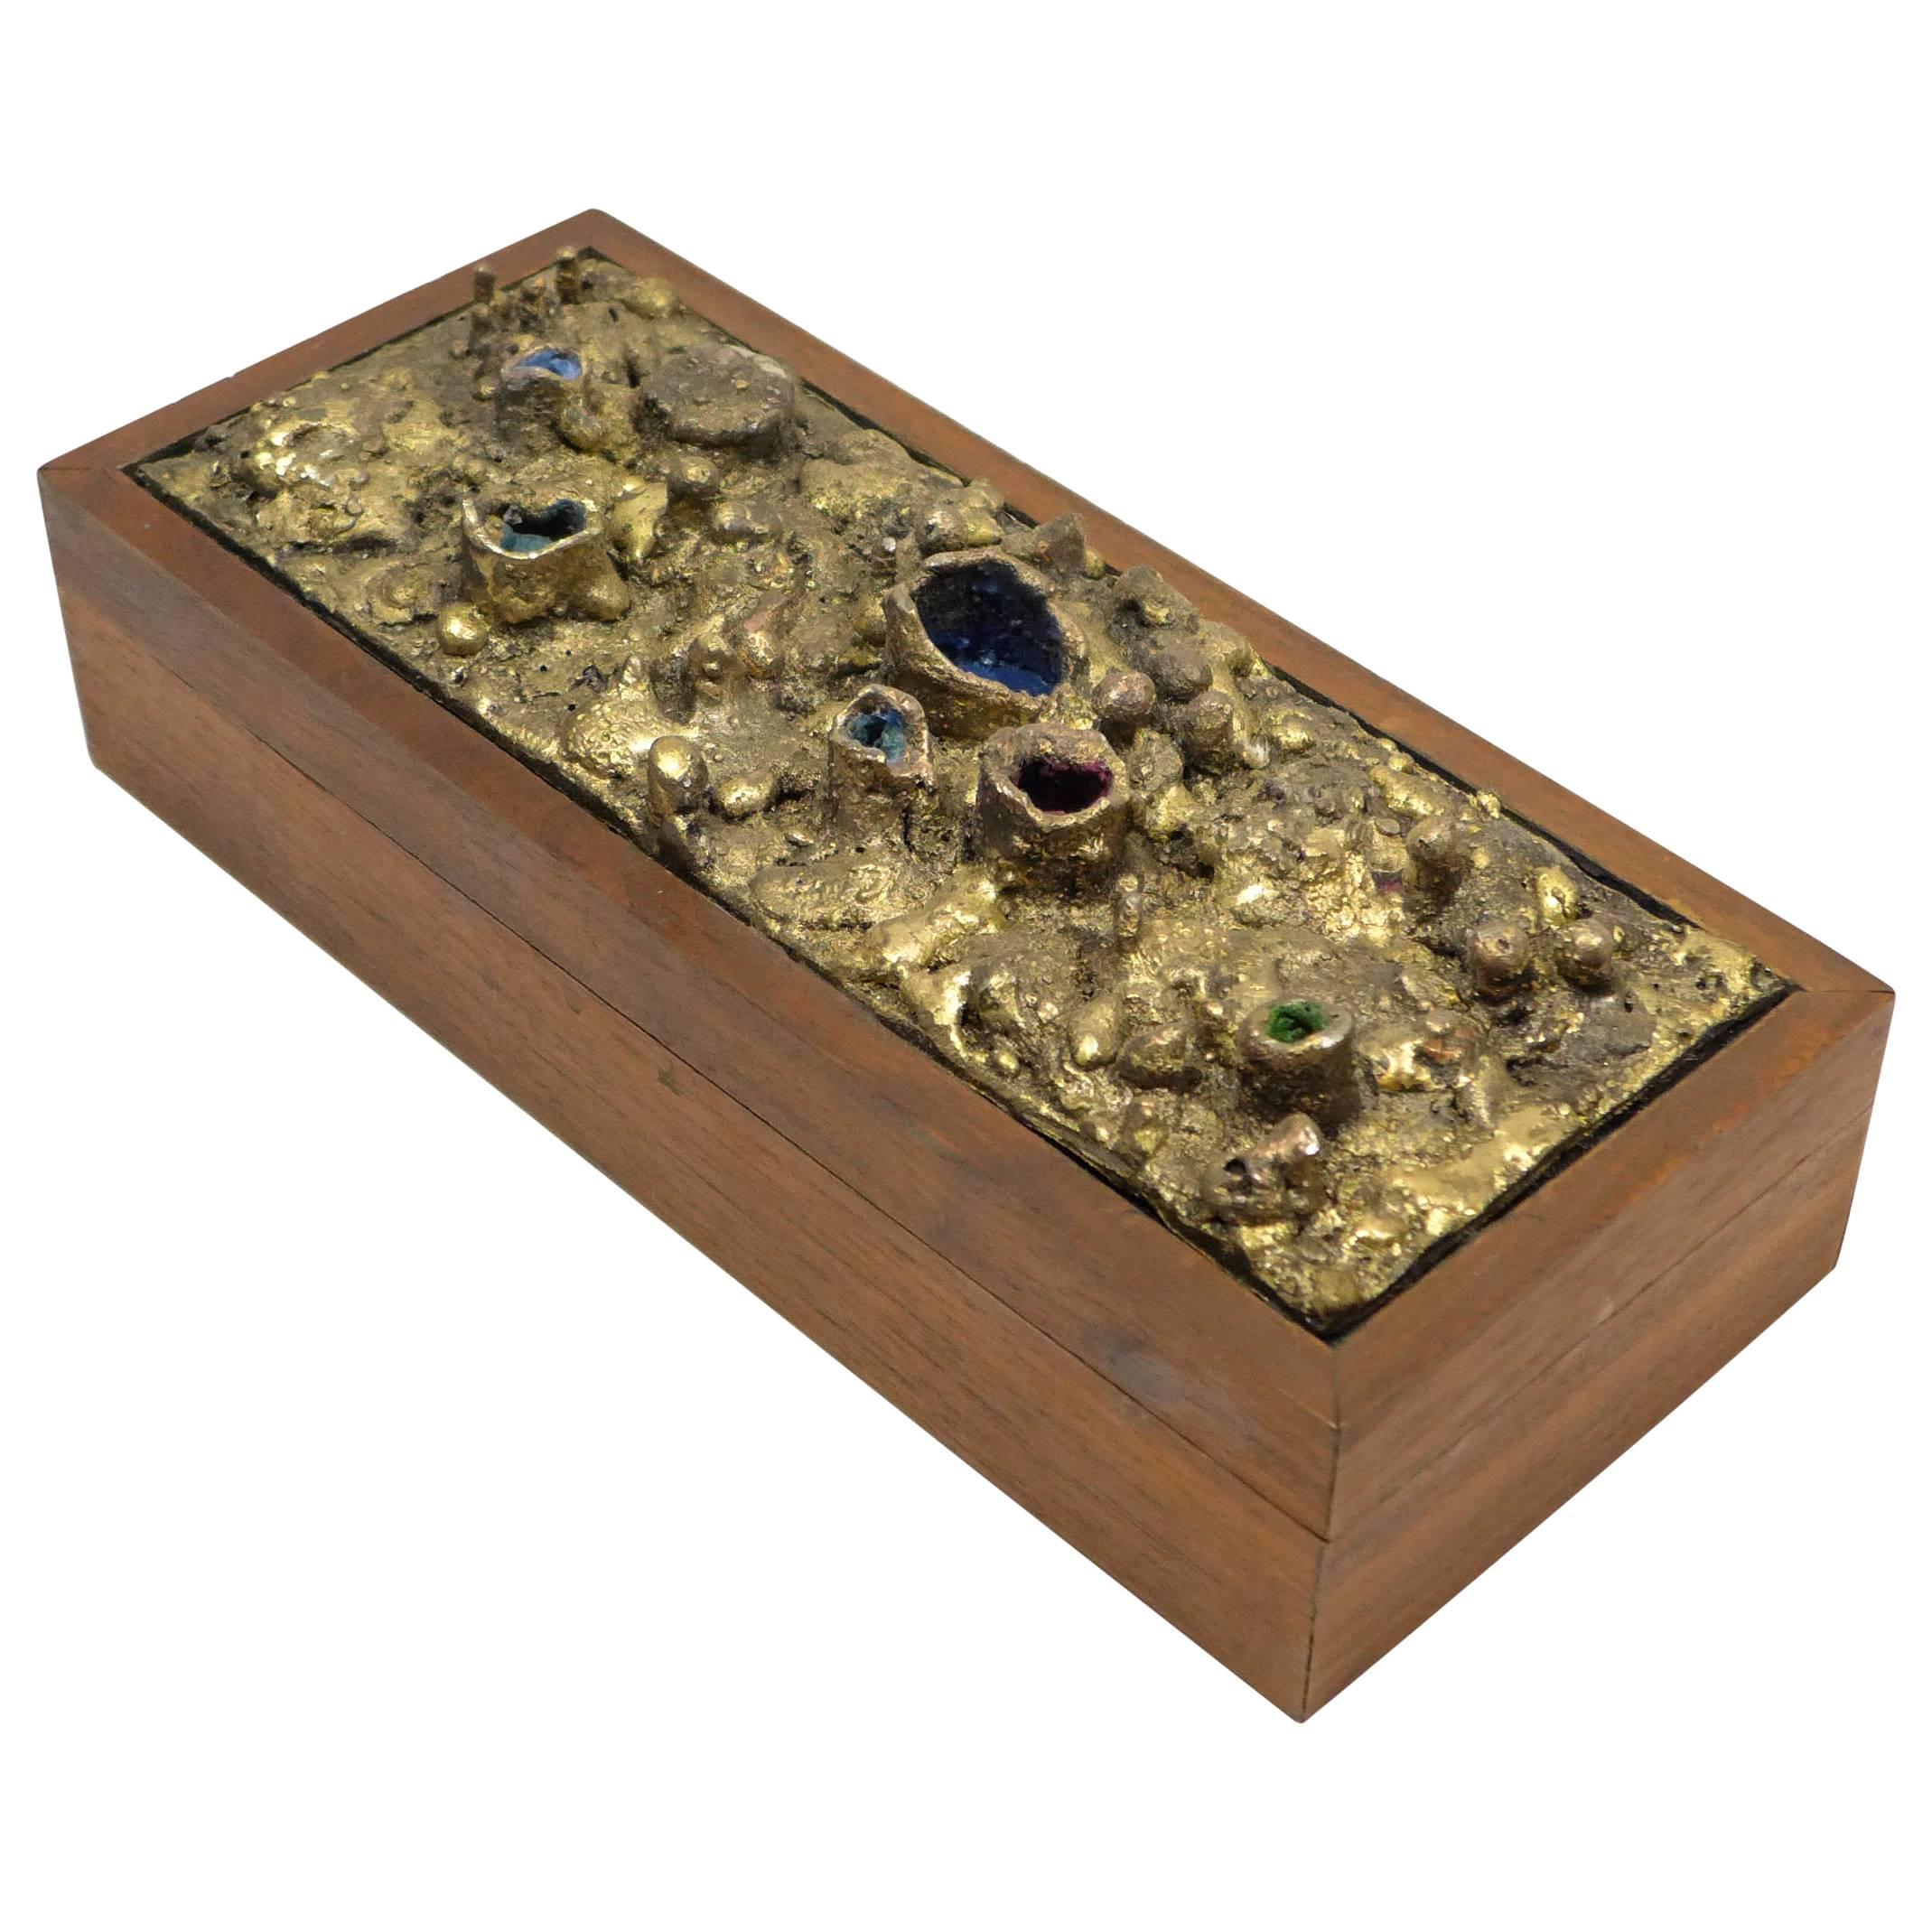 James Bearden "Trinket" Box in Wooden Frame